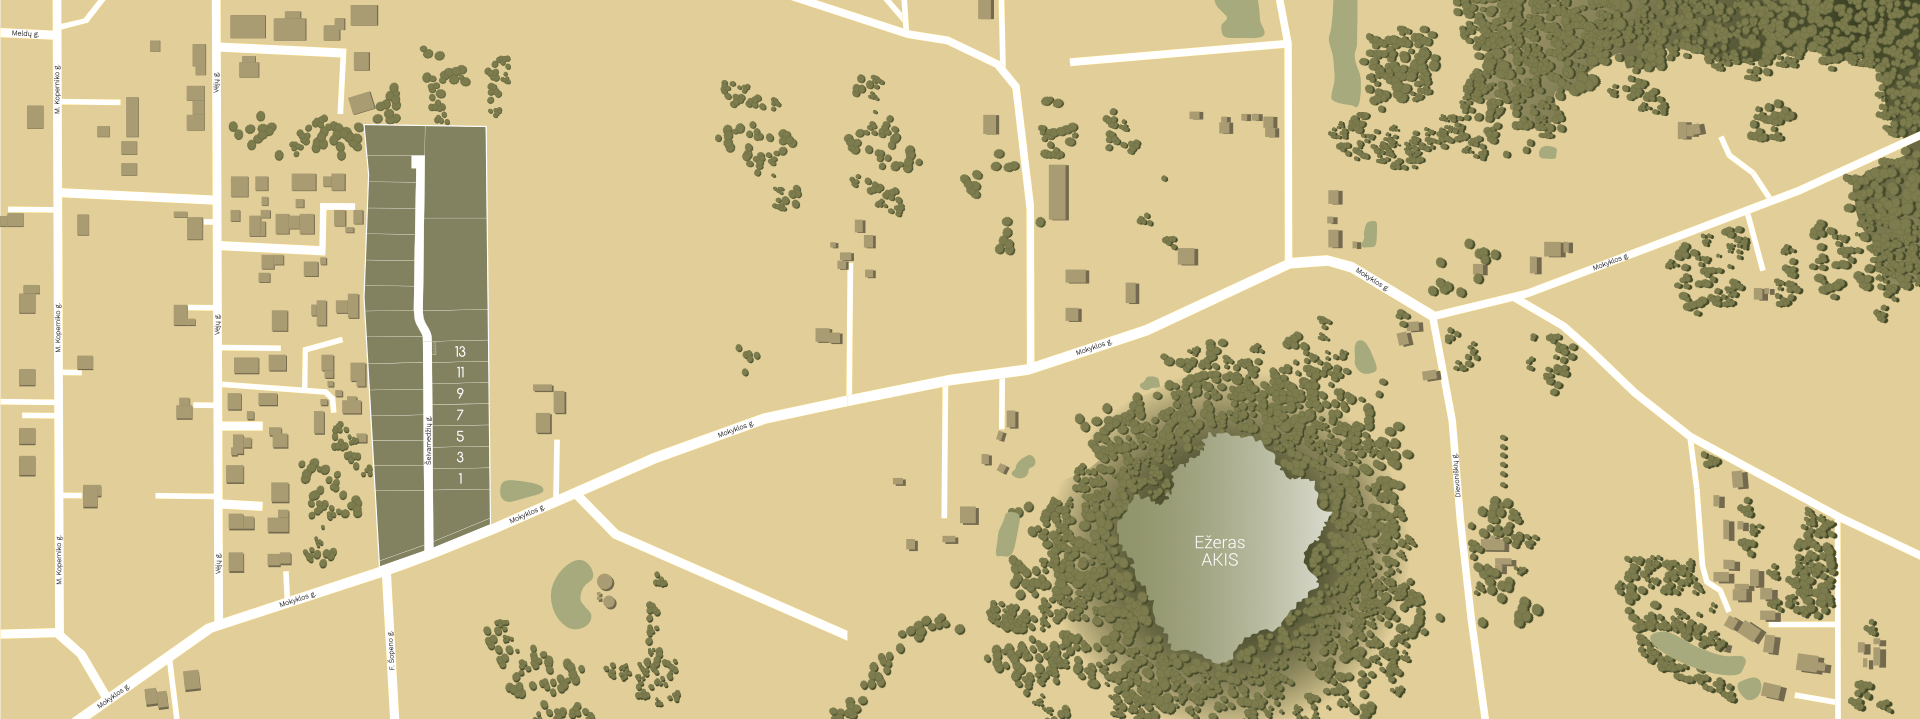 Village map illustration